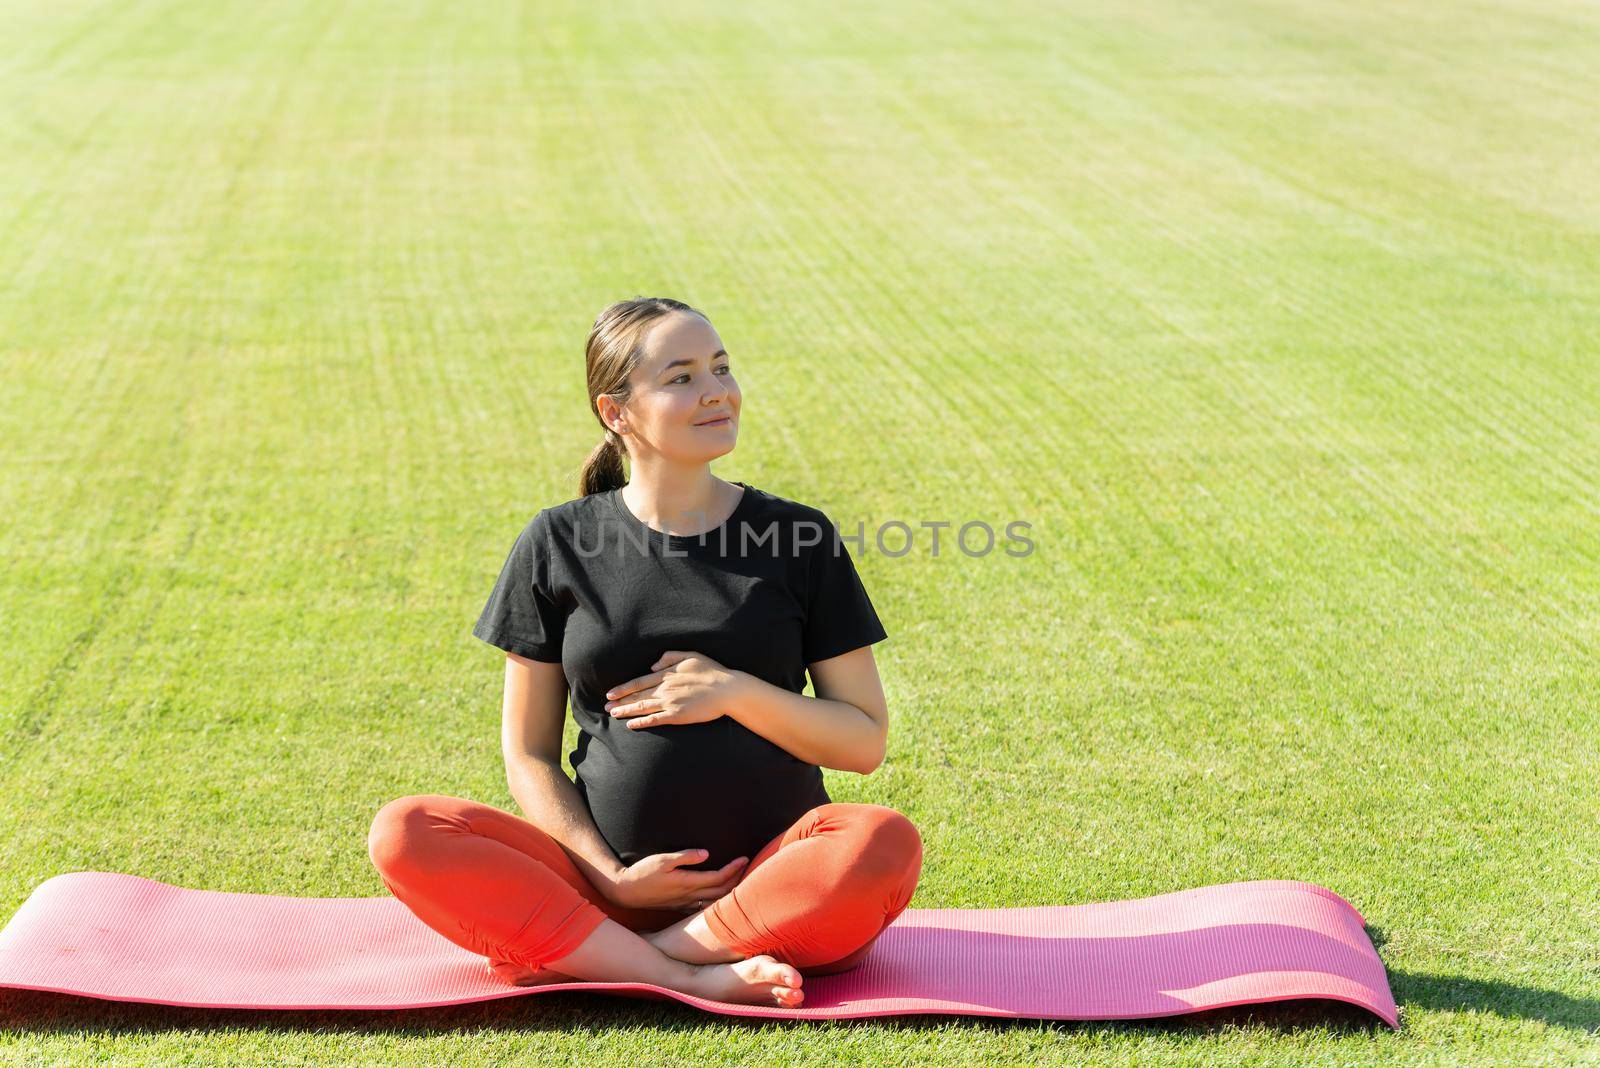 pregnant woman performs yoga asanas by maramorosz